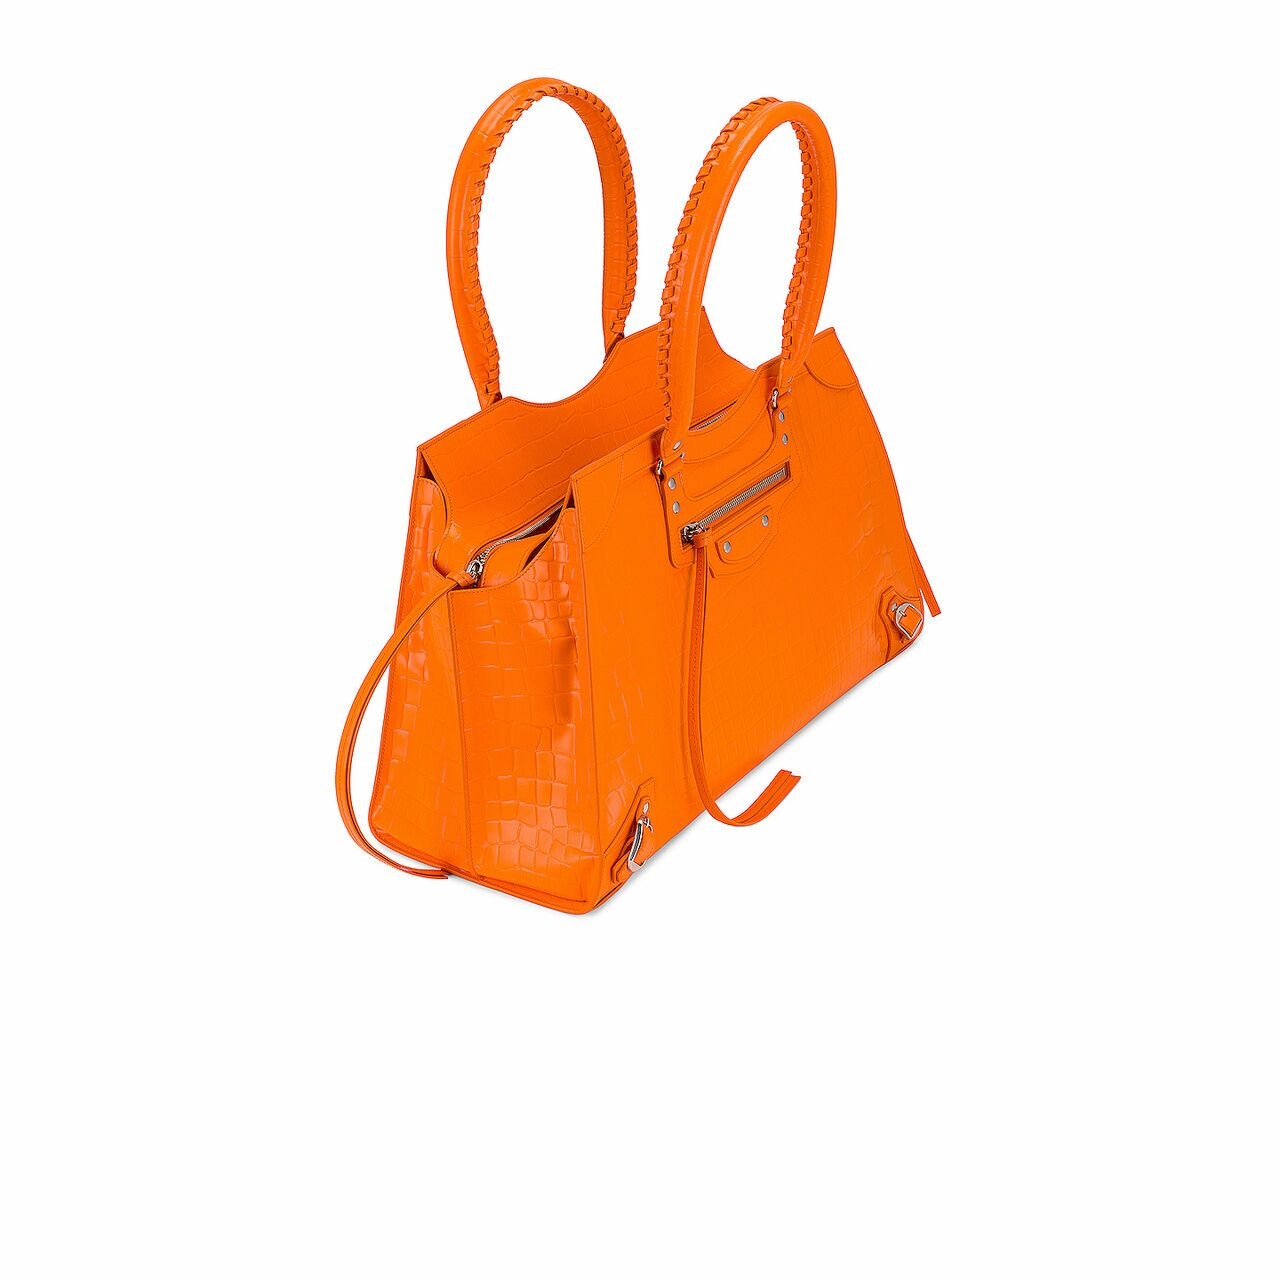 Balenciaga Orange Tote Bag